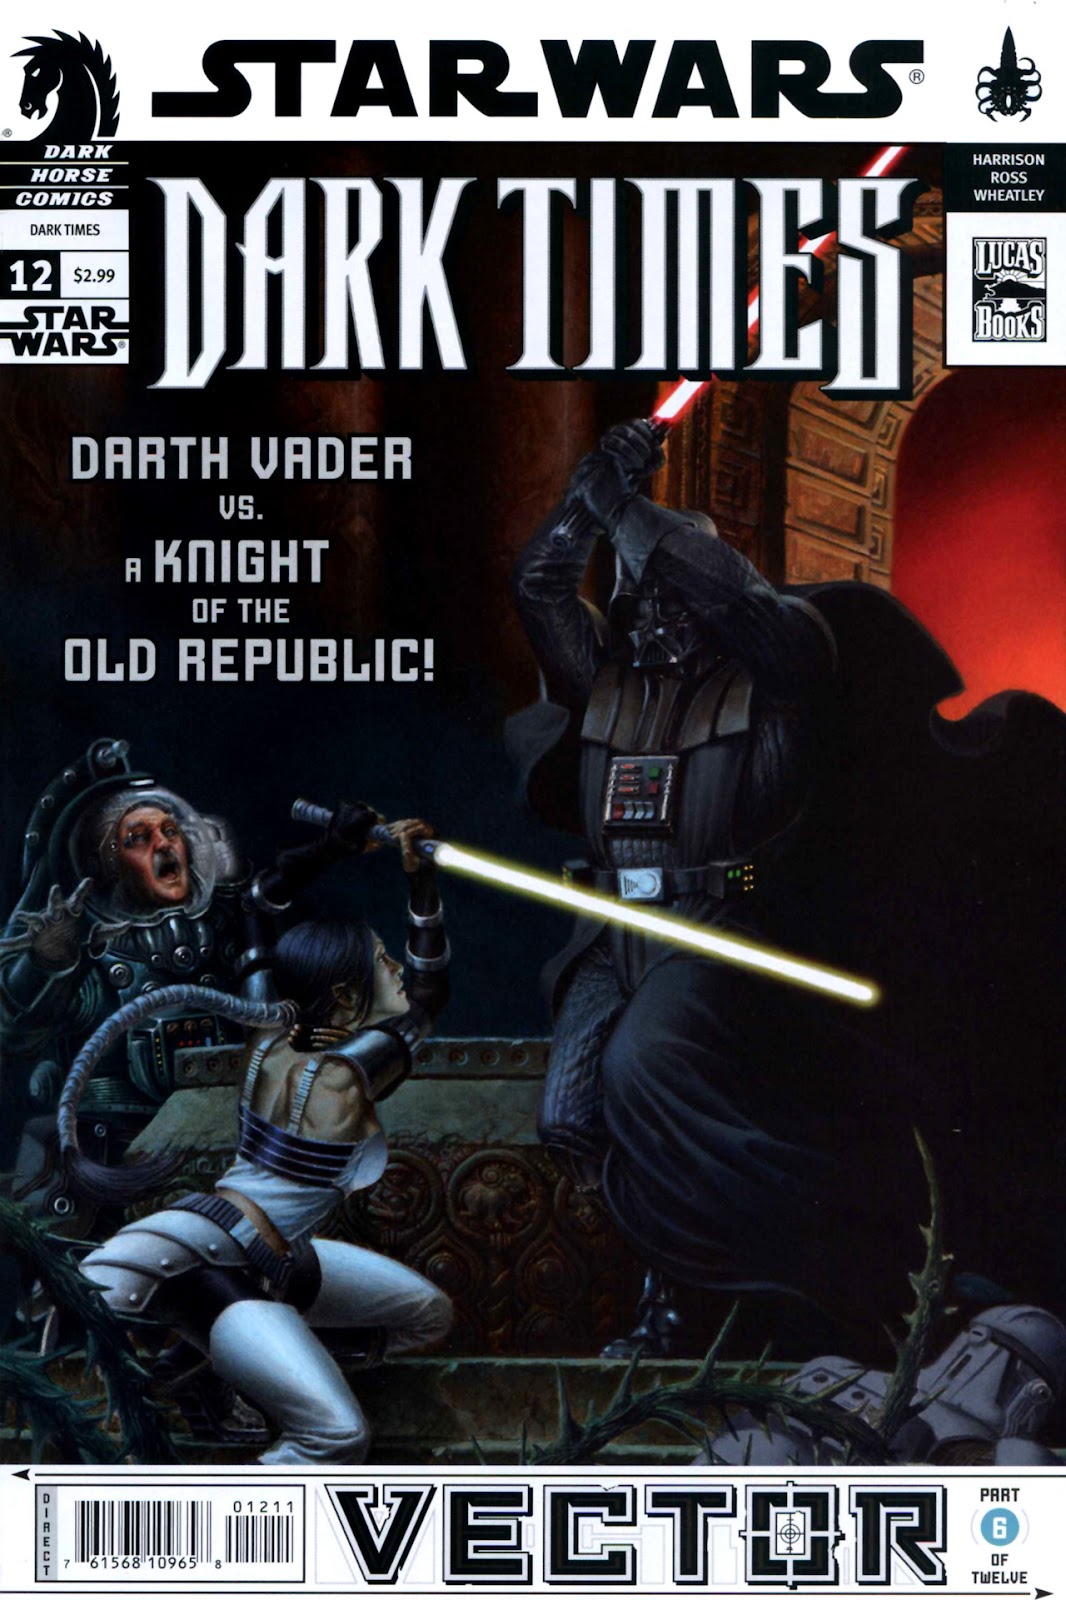 Star Wars: Dark Times issue 12 - Vector, Part 6 - Page 1